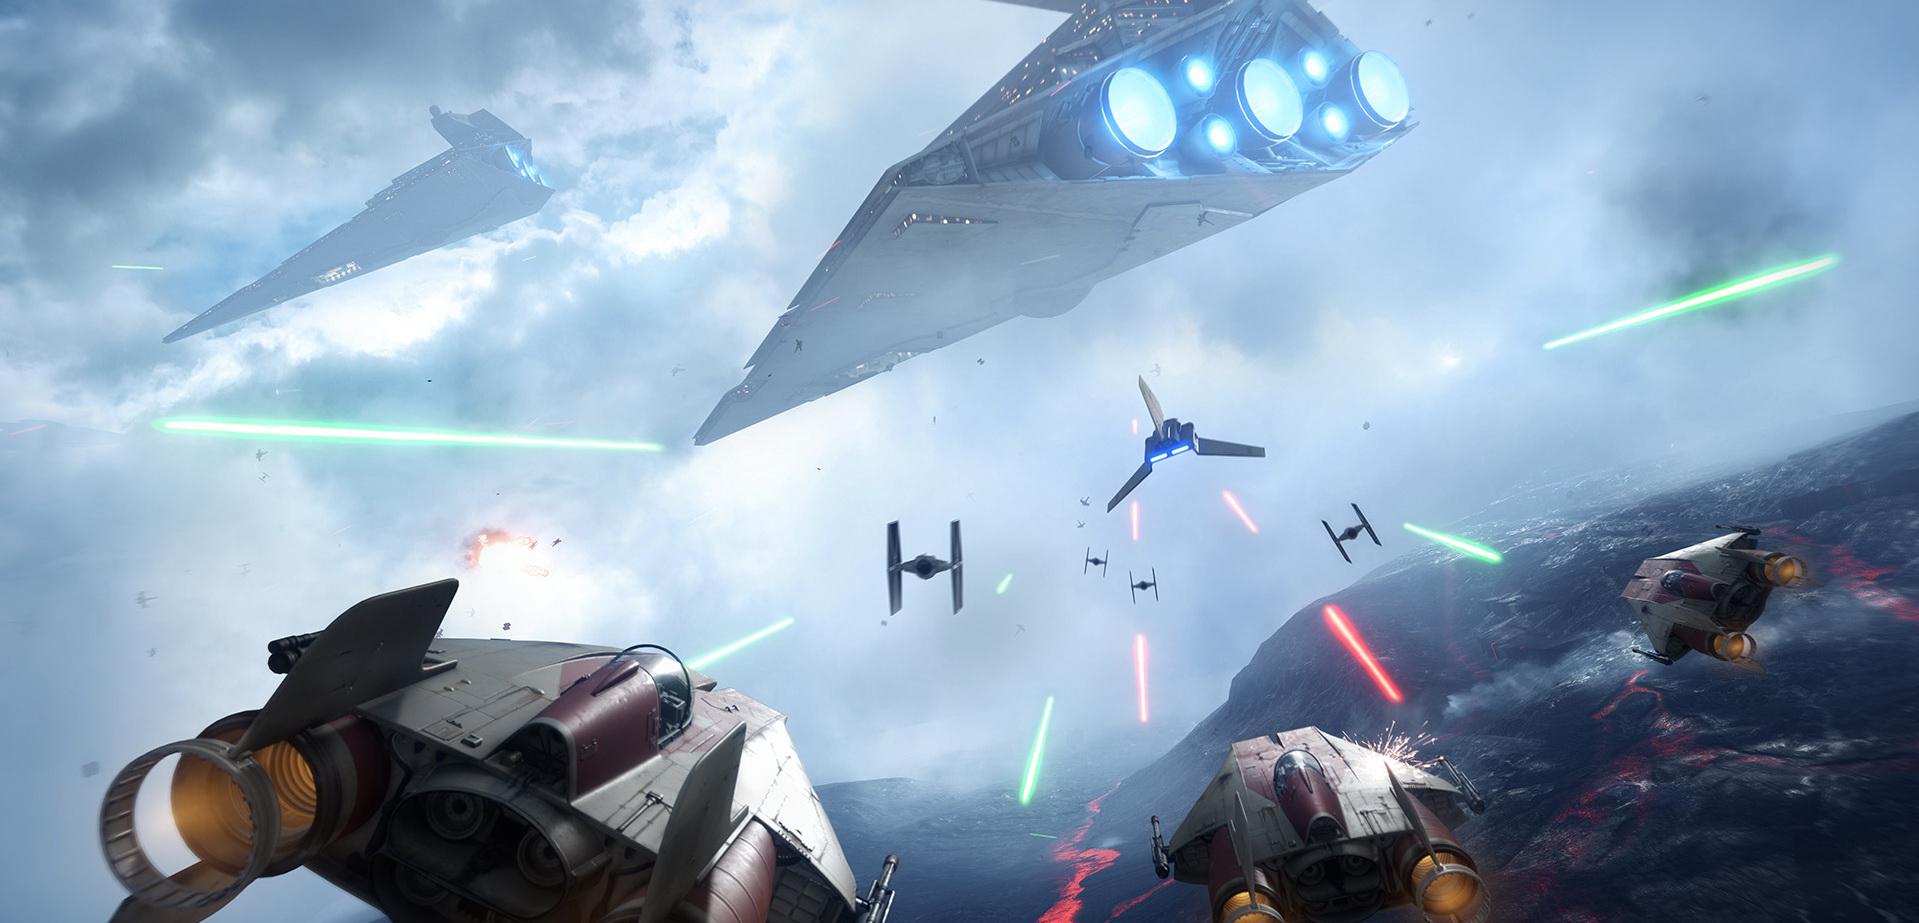 Analiza grafiki w Star Wars: Battlefront - PS4 vs XONE i split-screen